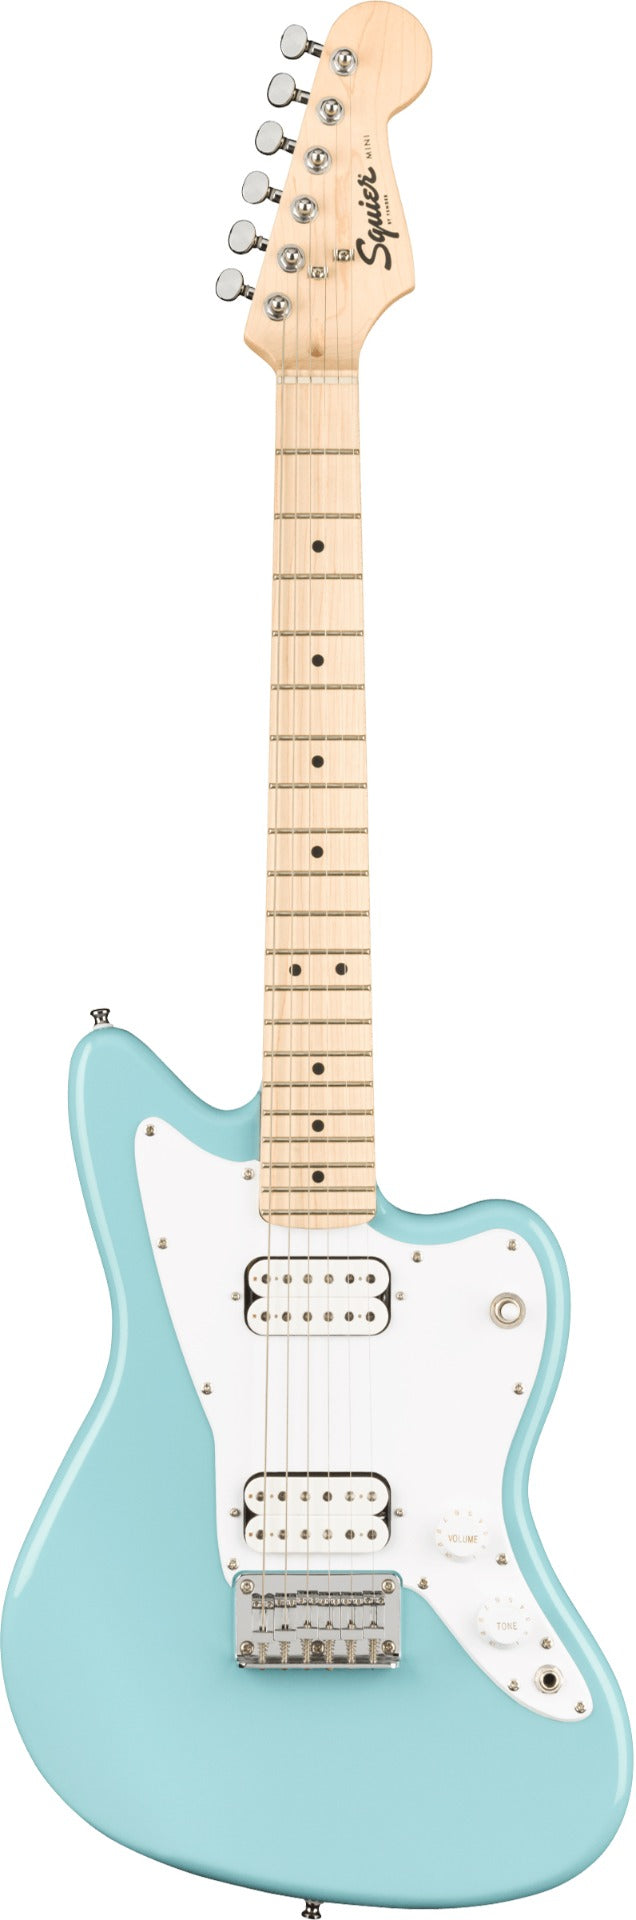 Squier Mini Jazzmaster HH Electric Guitar in Daphne Blue